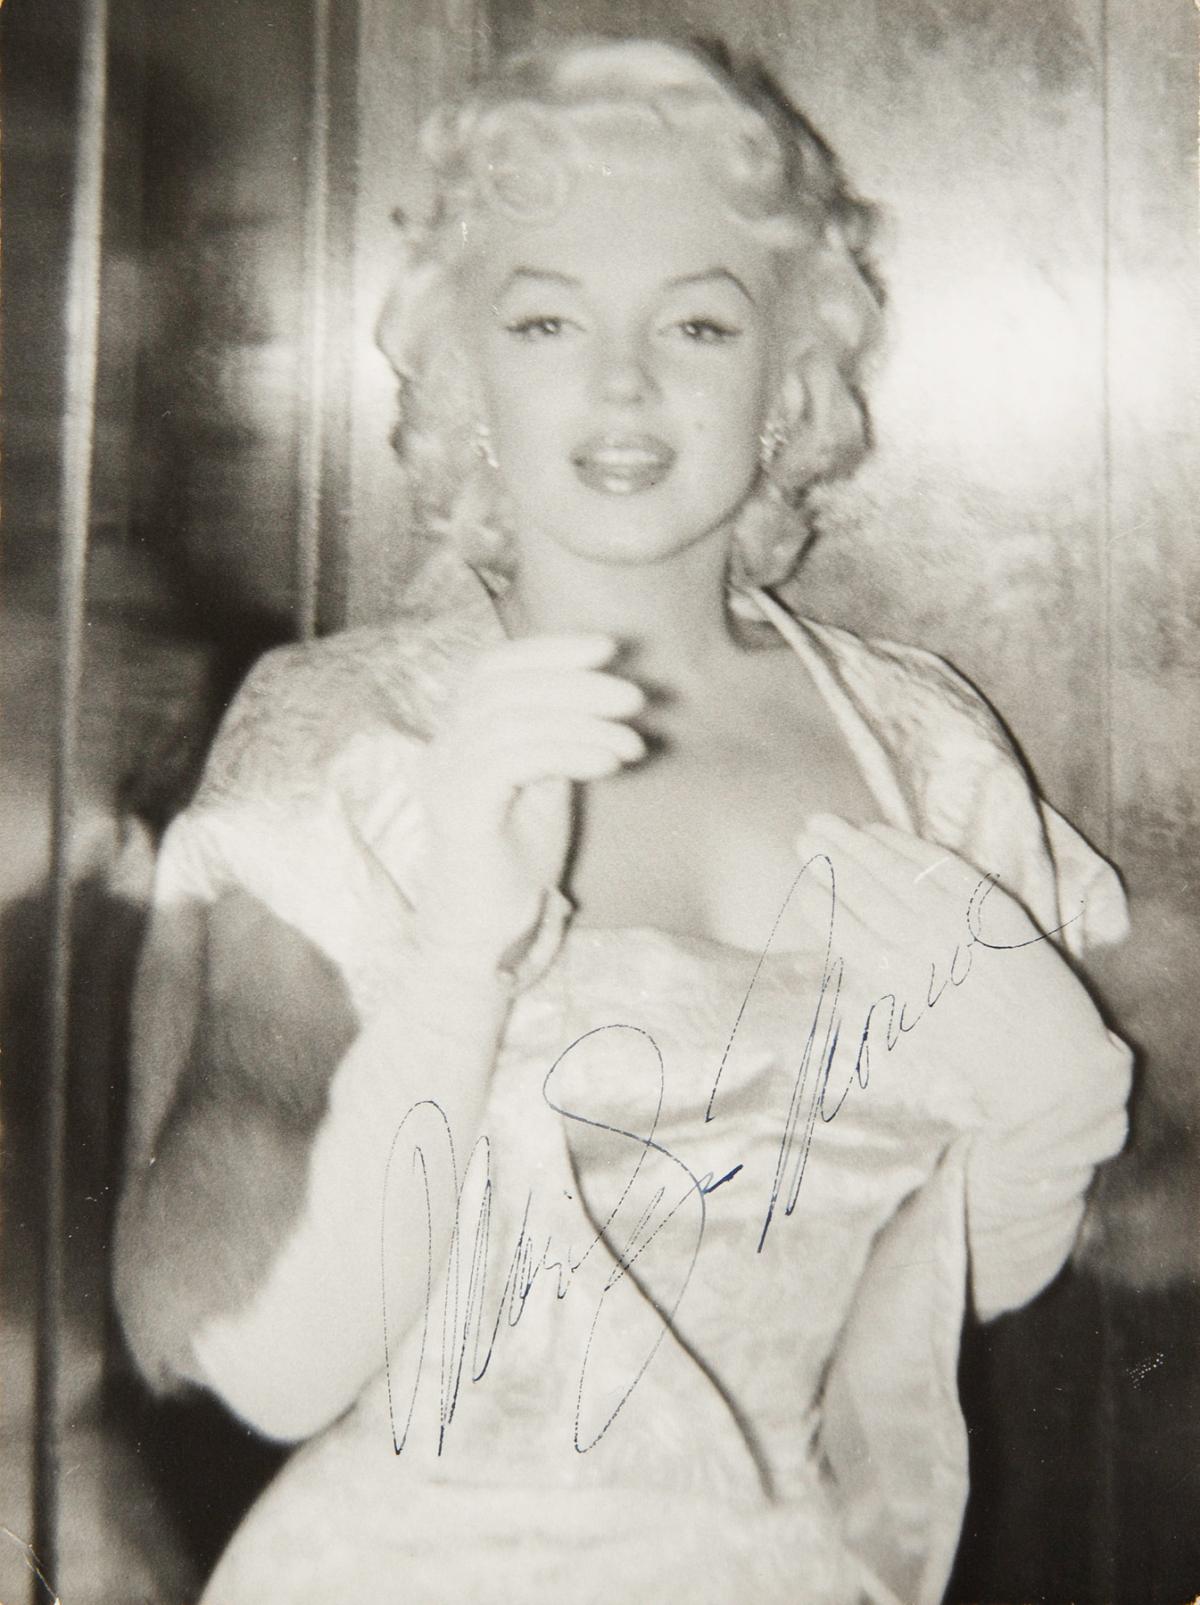 Marilyn Monroe Photos: Snapshots Reveal Star's Lighter Side | TIME